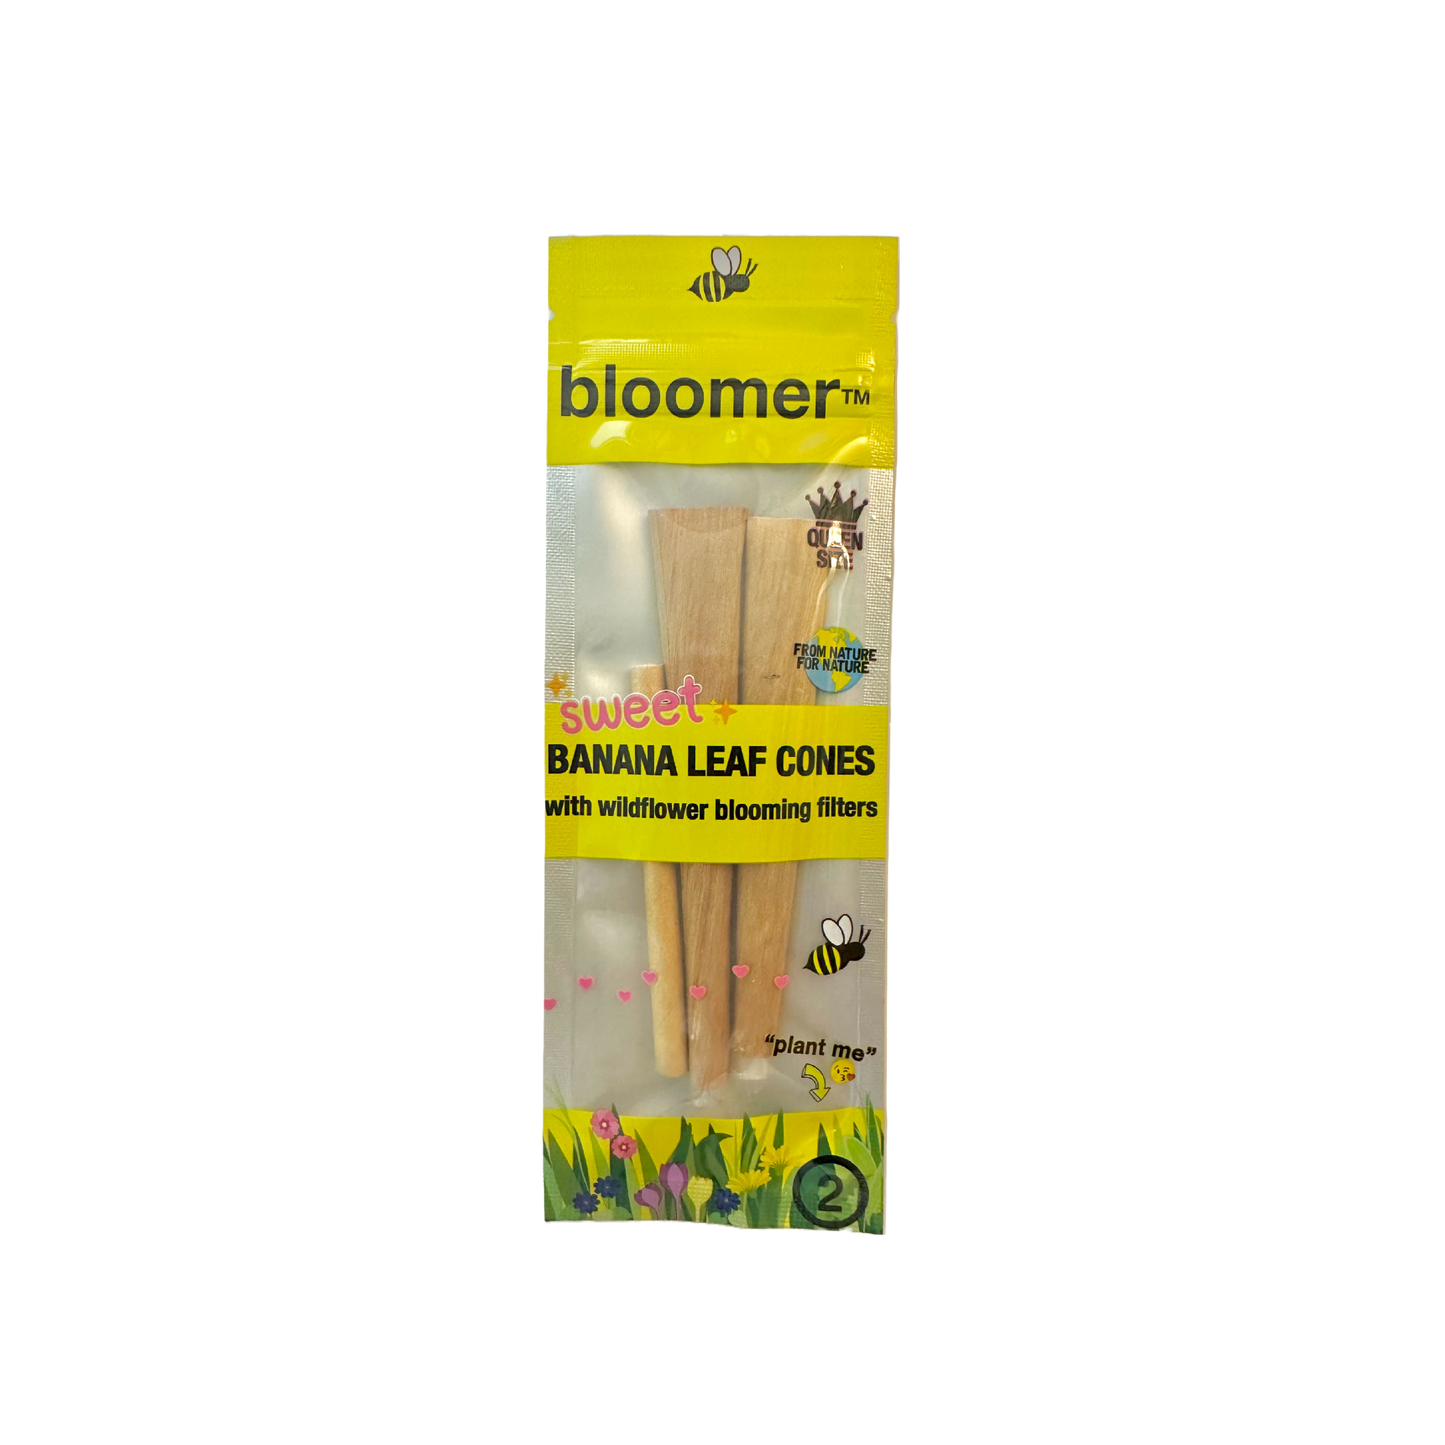 bloomer™ sweet banana leaf cones